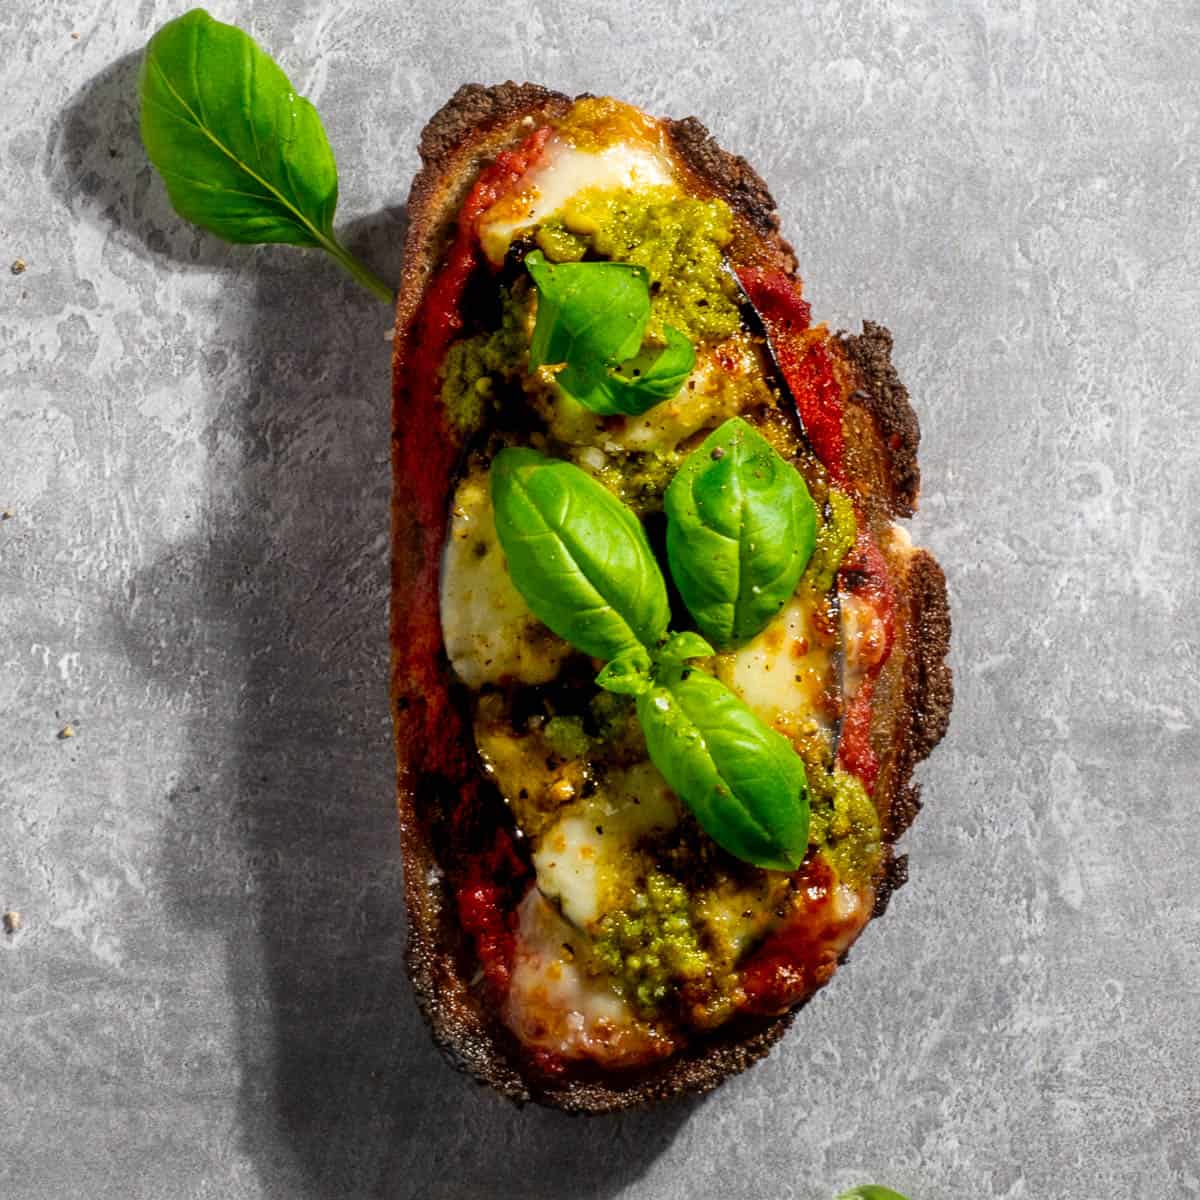 Aubergine/eggplant pizza toast on a grey background.